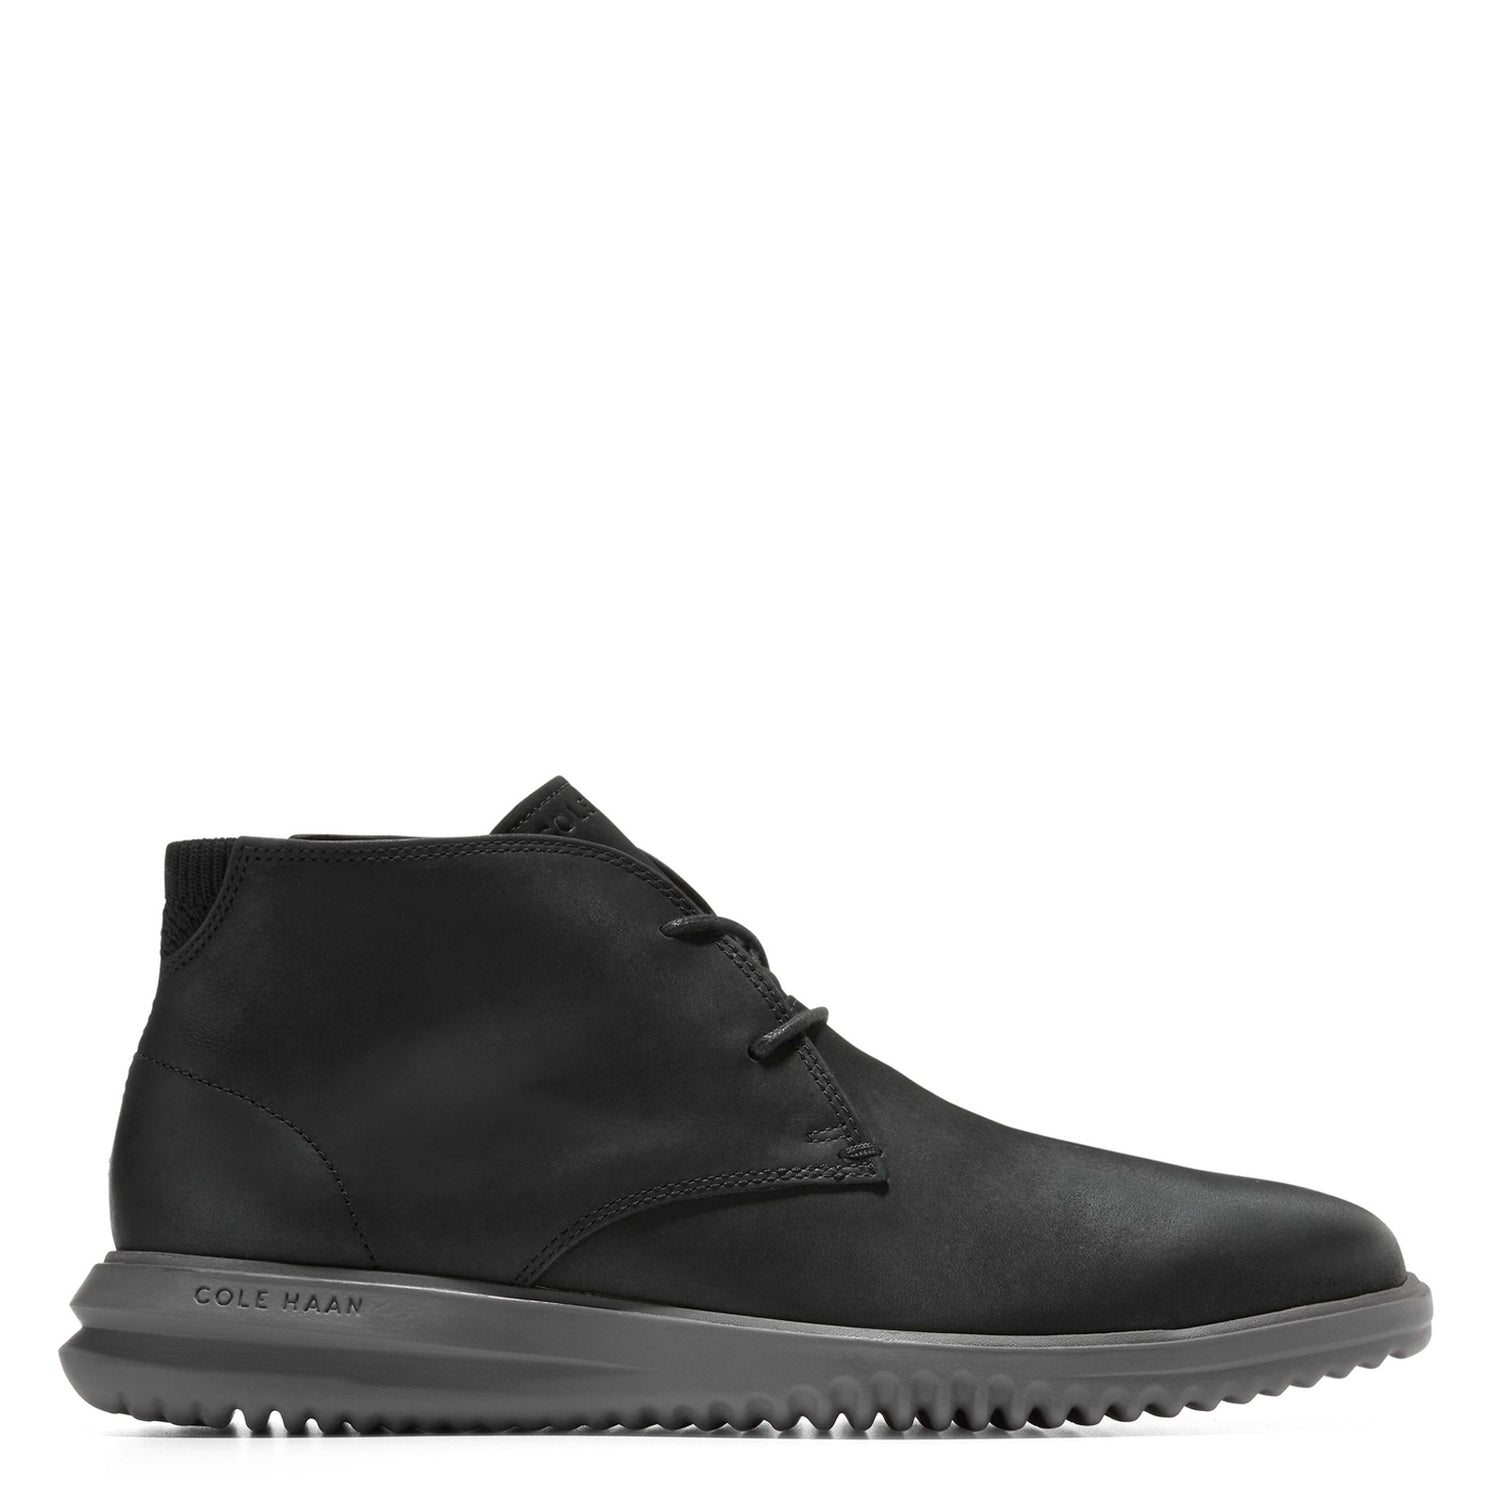 Peltz Shoes  Men's Cole Haan Grand+ Chukka Boot Black/Black C36921